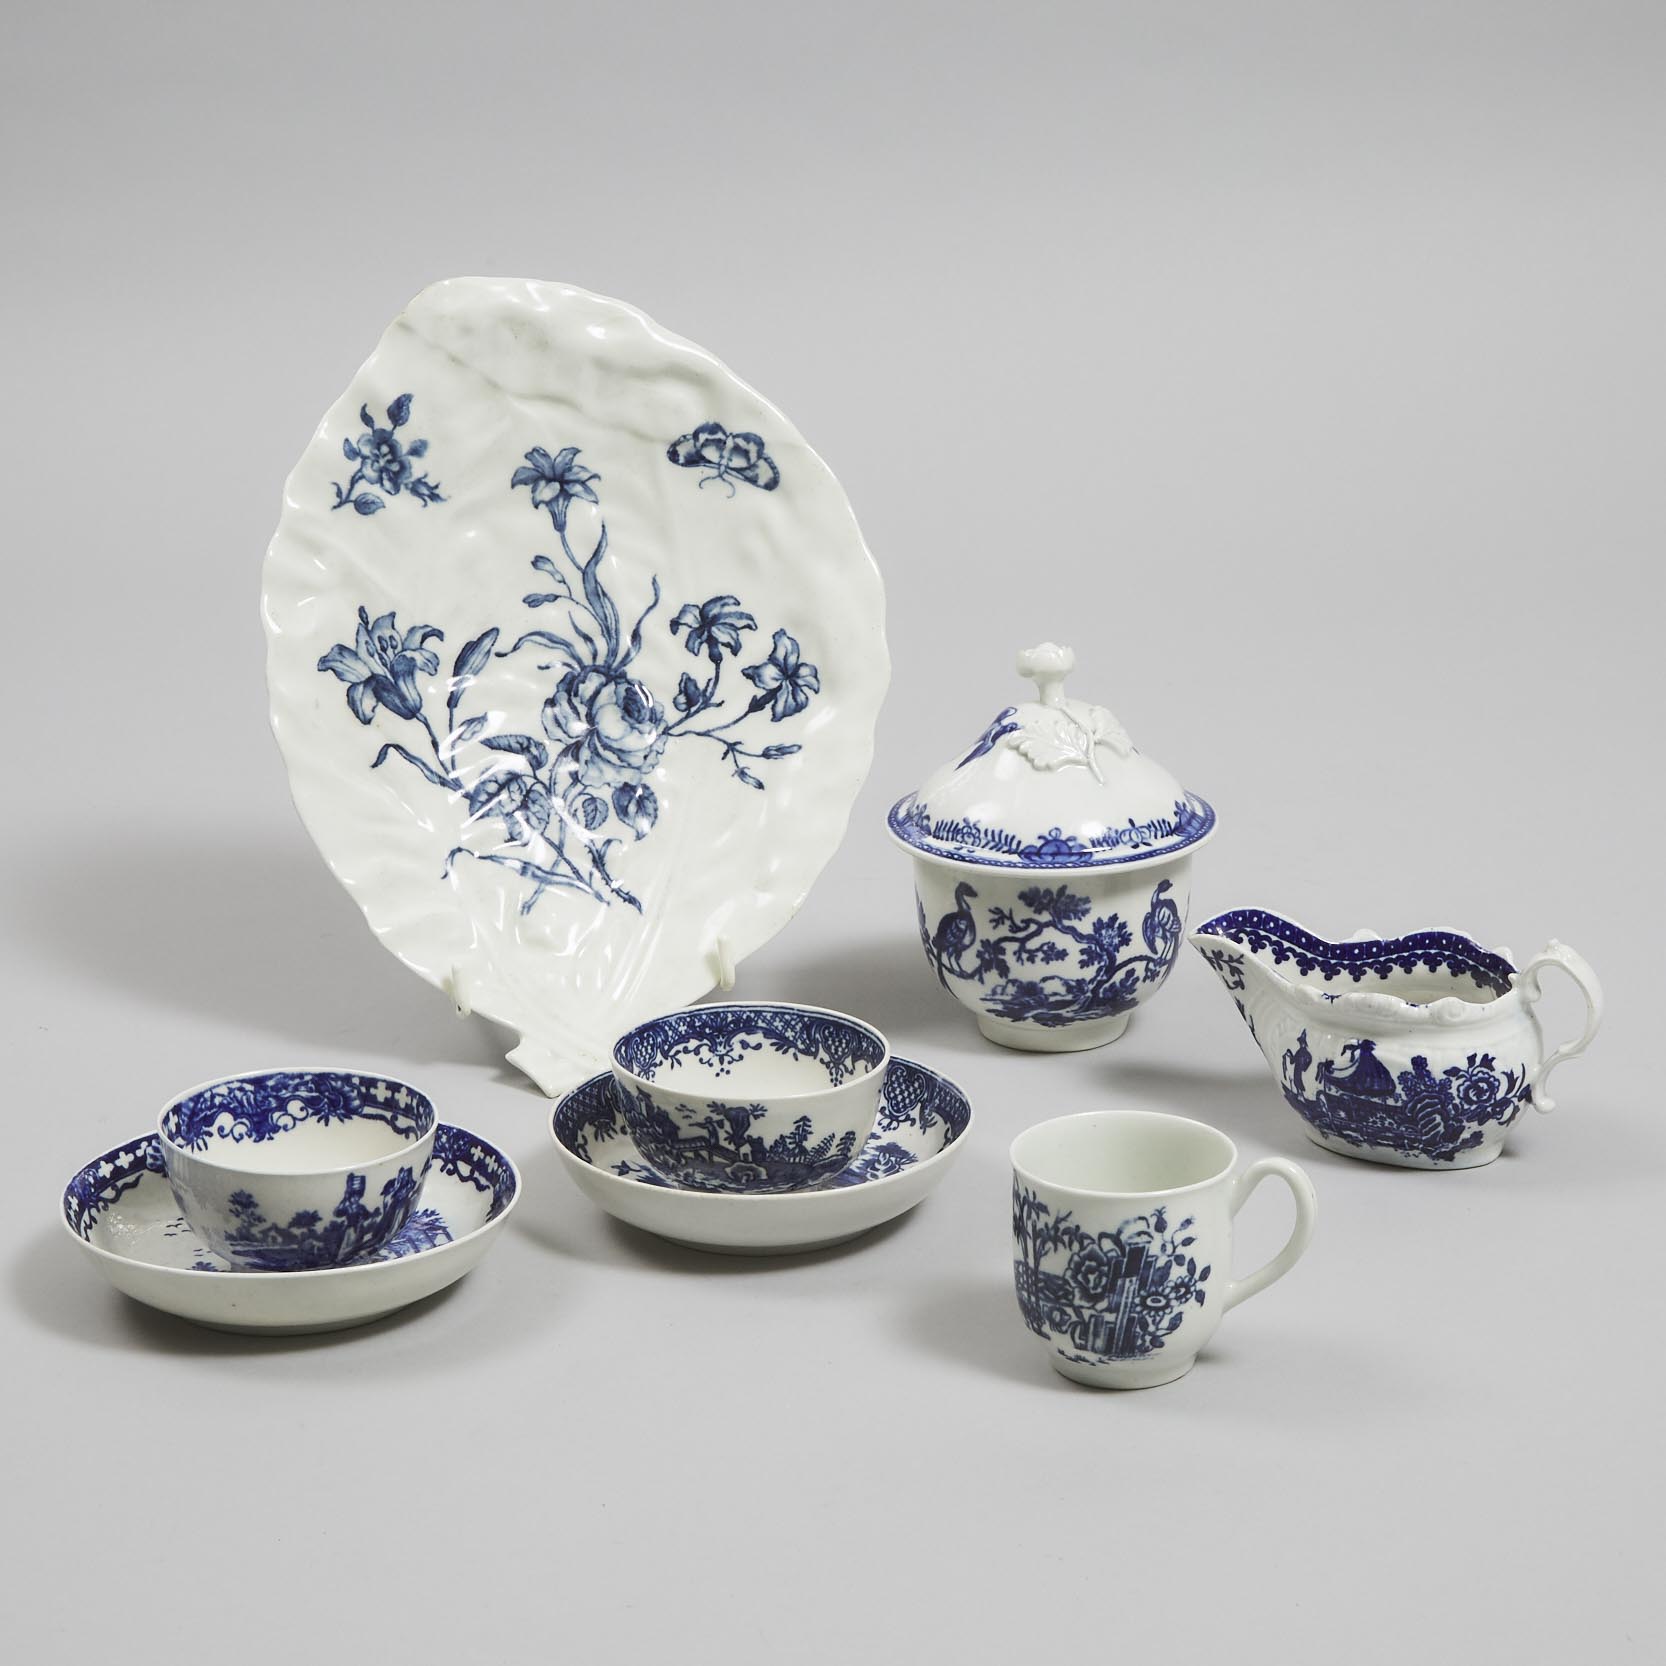 Group of Worcester Blue Printed Porcelain, c.1765-85